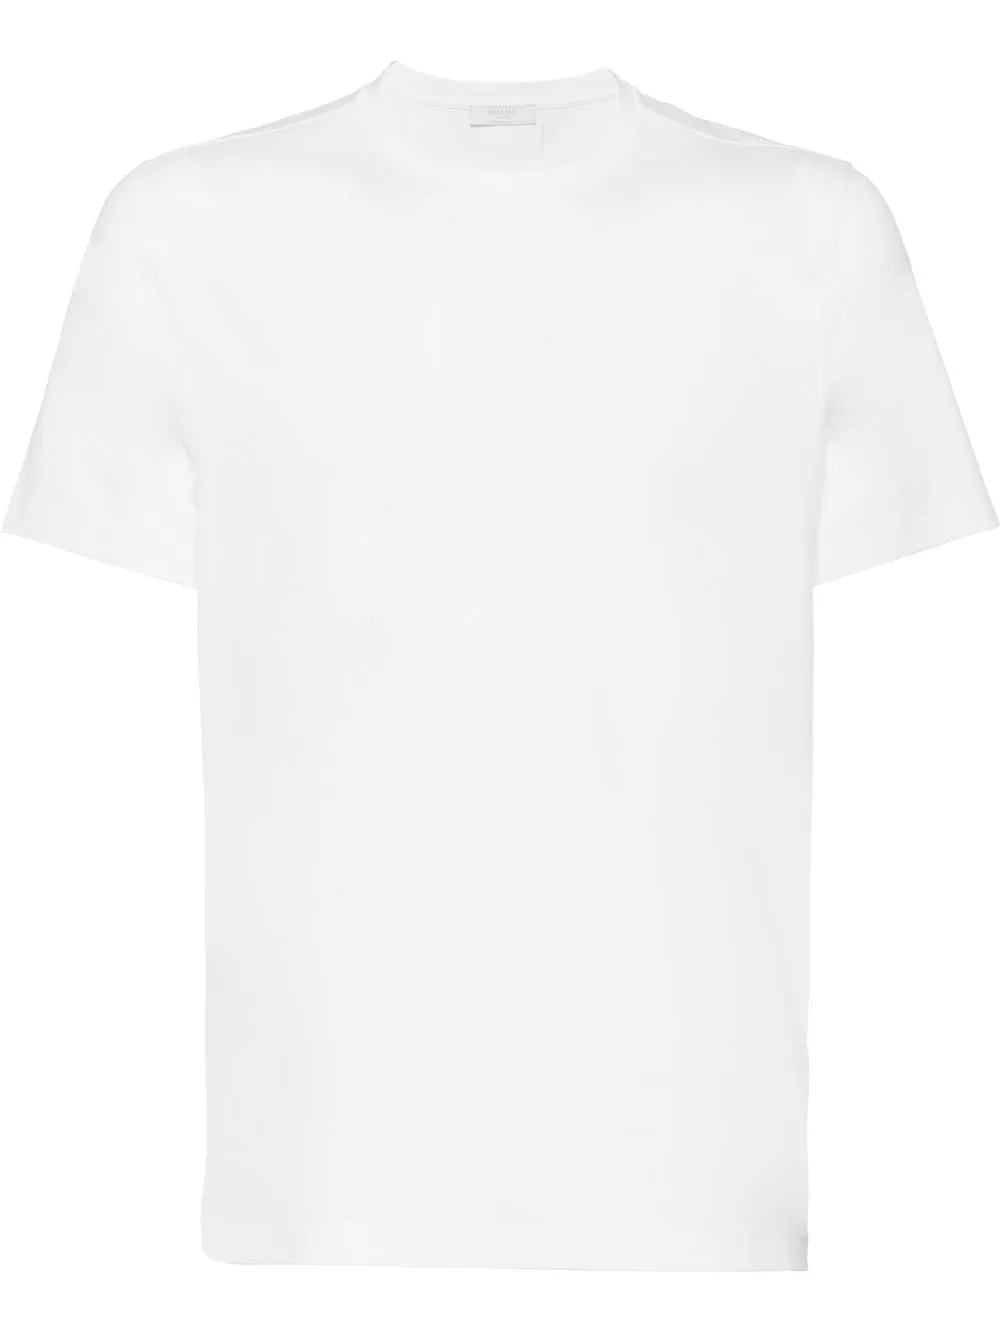 PRADA classic fitted t-shirt white-2